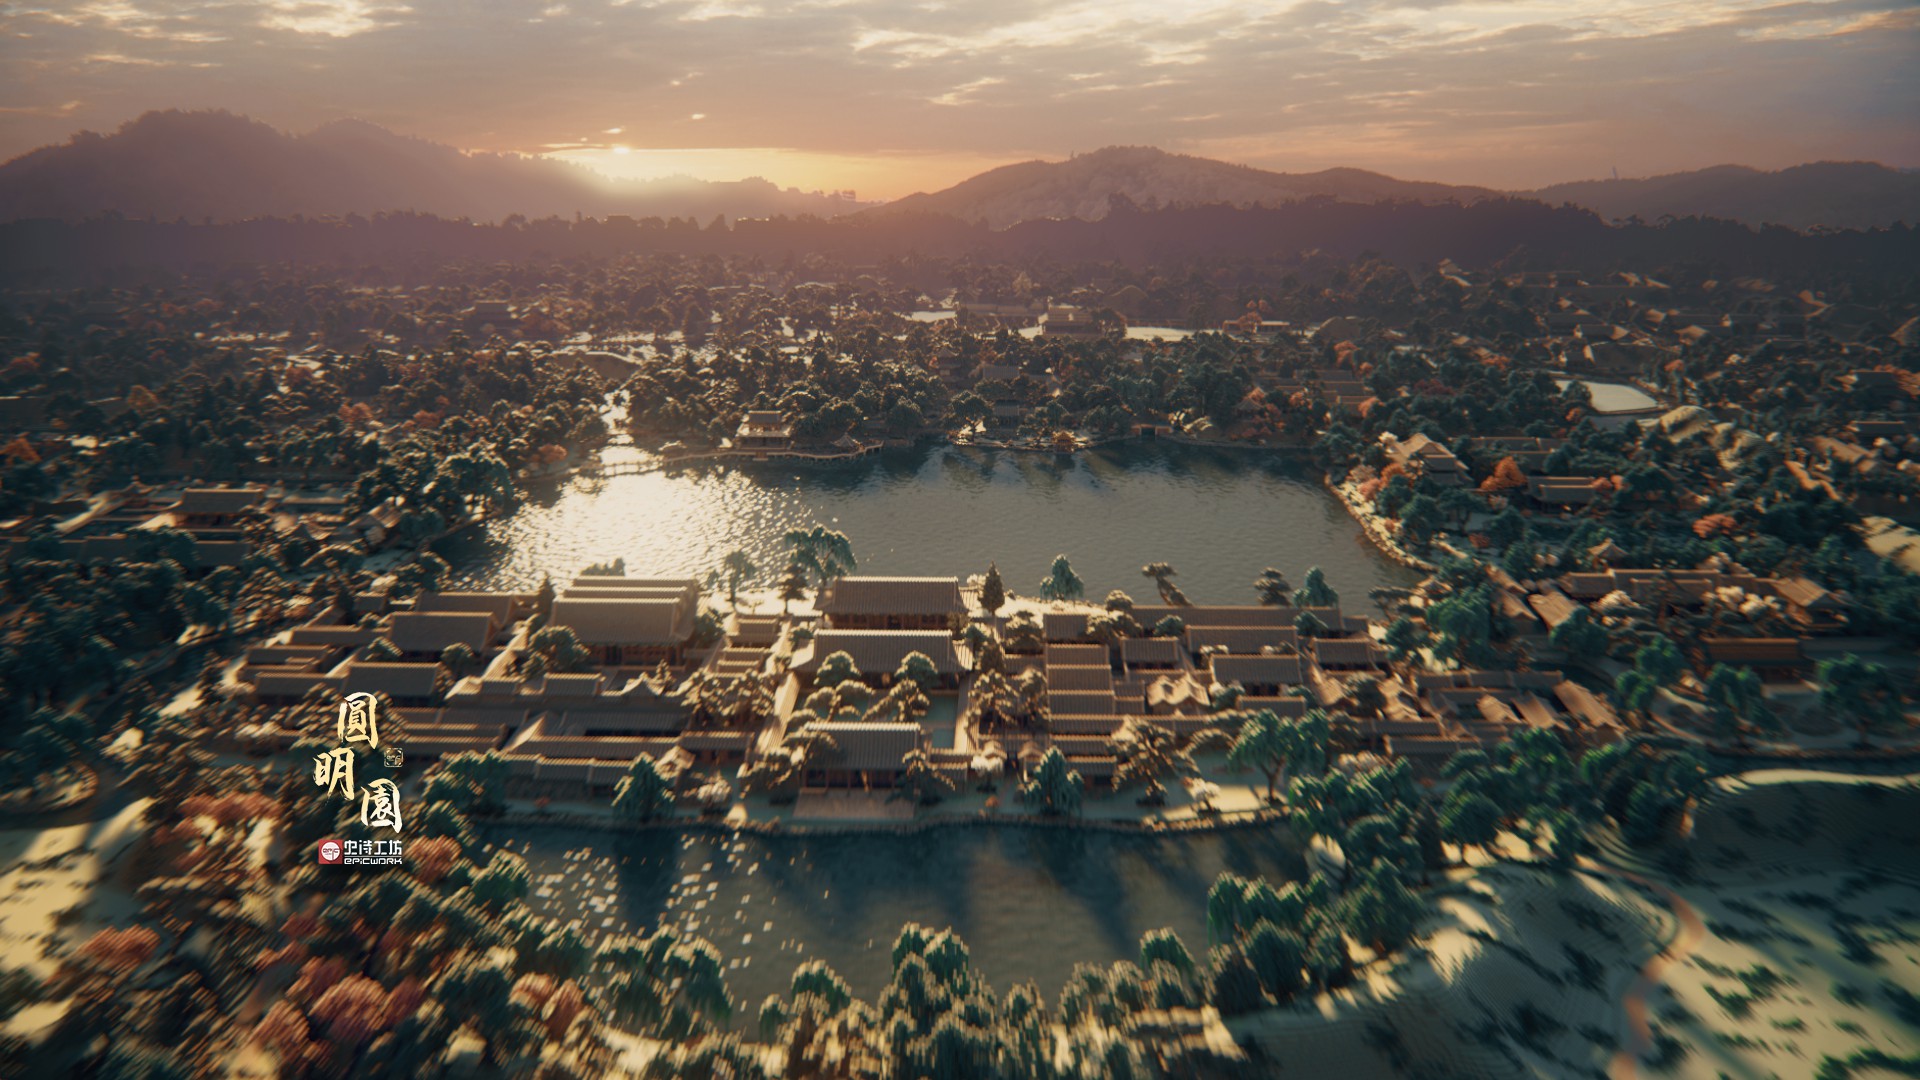 【Minecraft】Epicwork Production——The Old Summer Palace·万园之园·圆明园 Minecraft Map